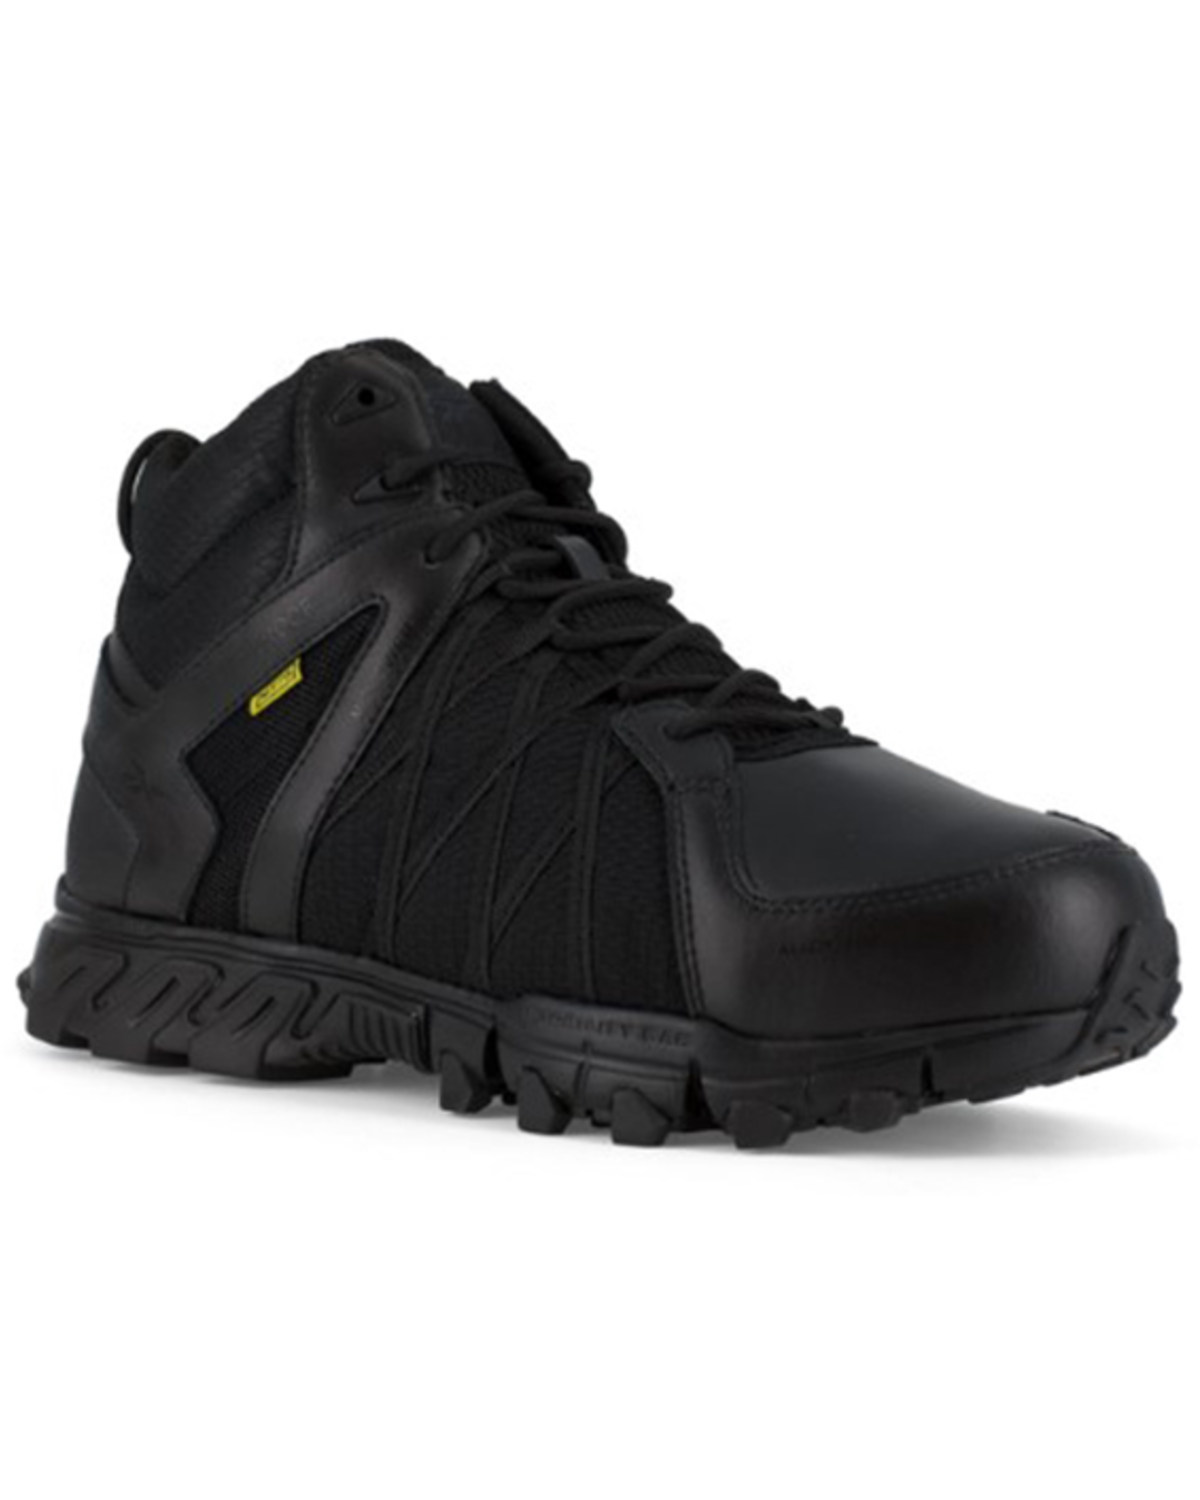 Reebok Men's Trailgrip Waterproof Athletic Hiker Work Boots - Alloy Toe